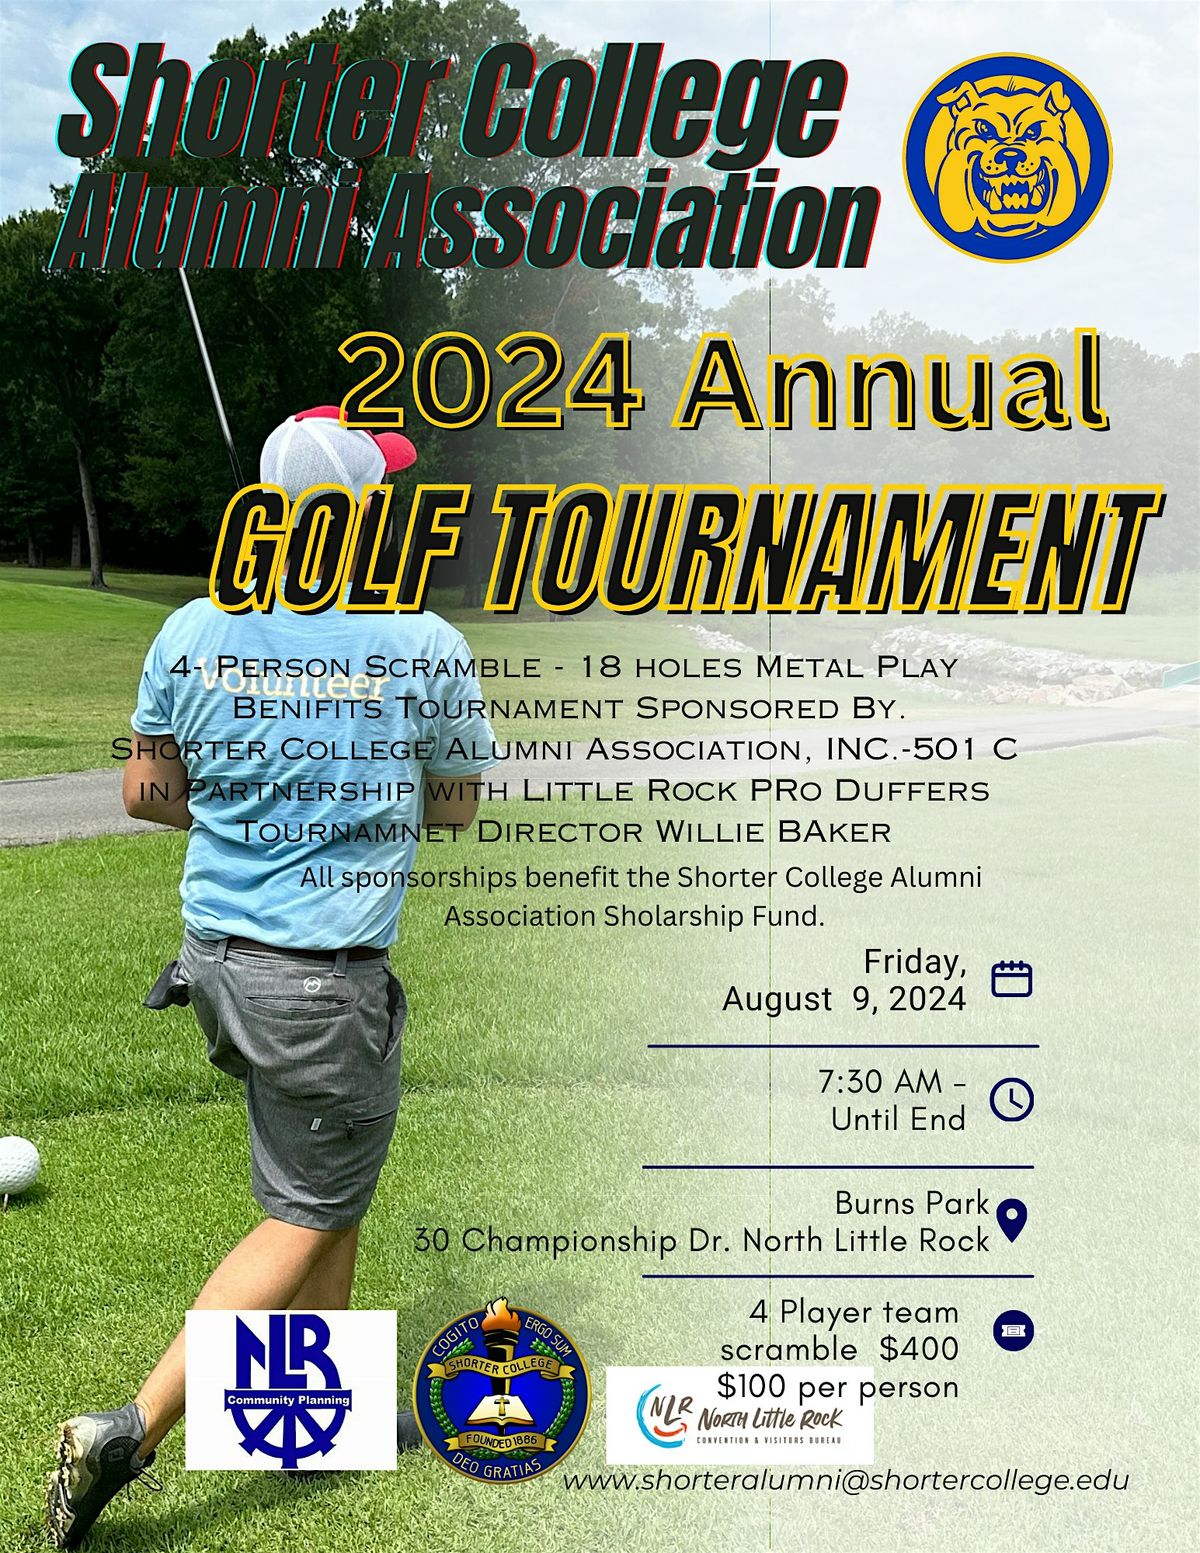 Shorter College Alumni Association Annual Golf Tournament